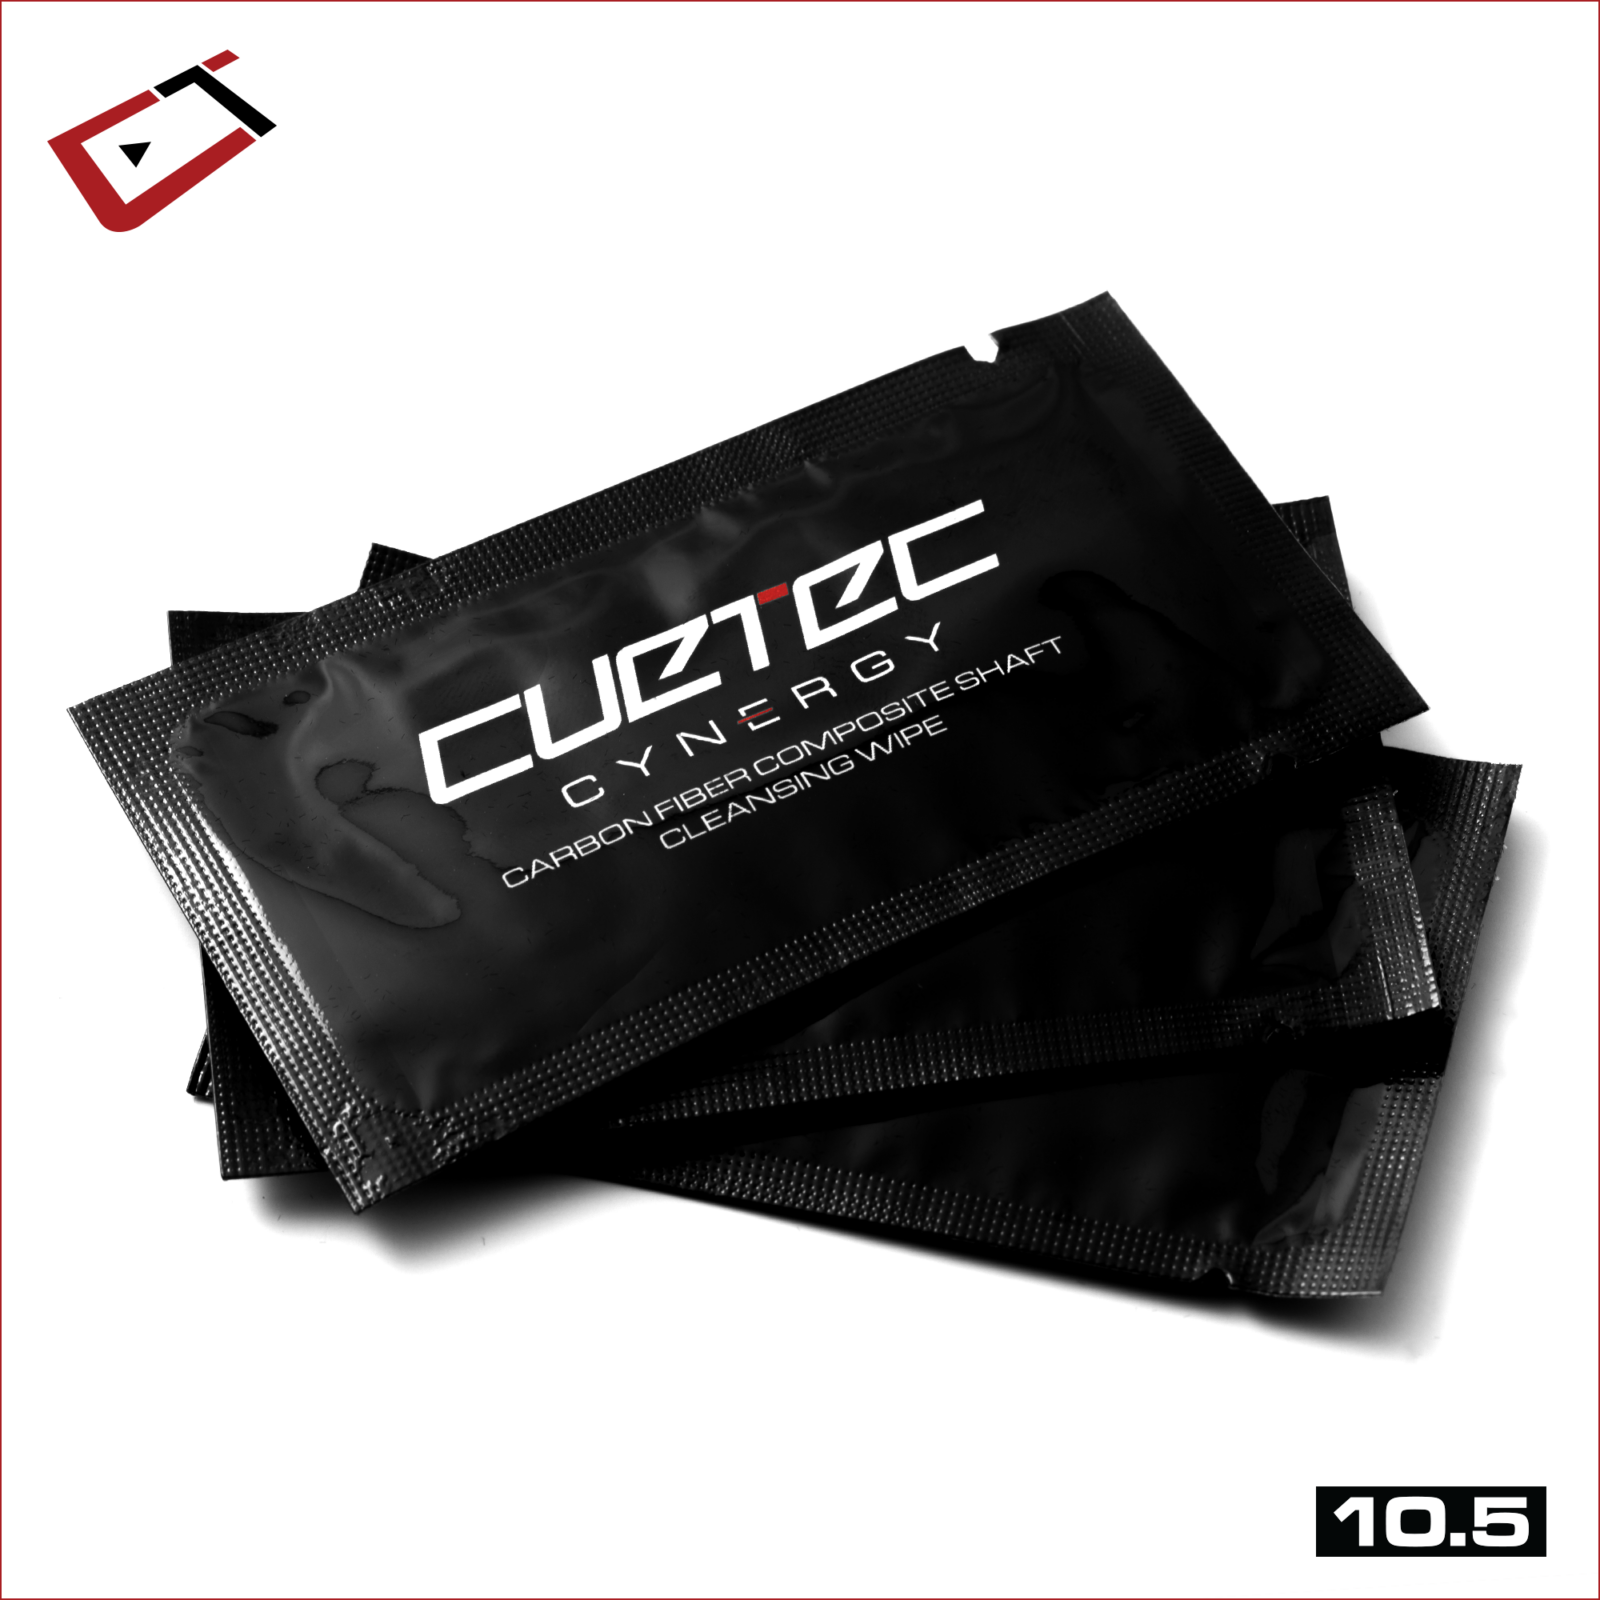 Cuetec Cynergy Shaft 10.5mm 3/8x10 95-025T Wipes